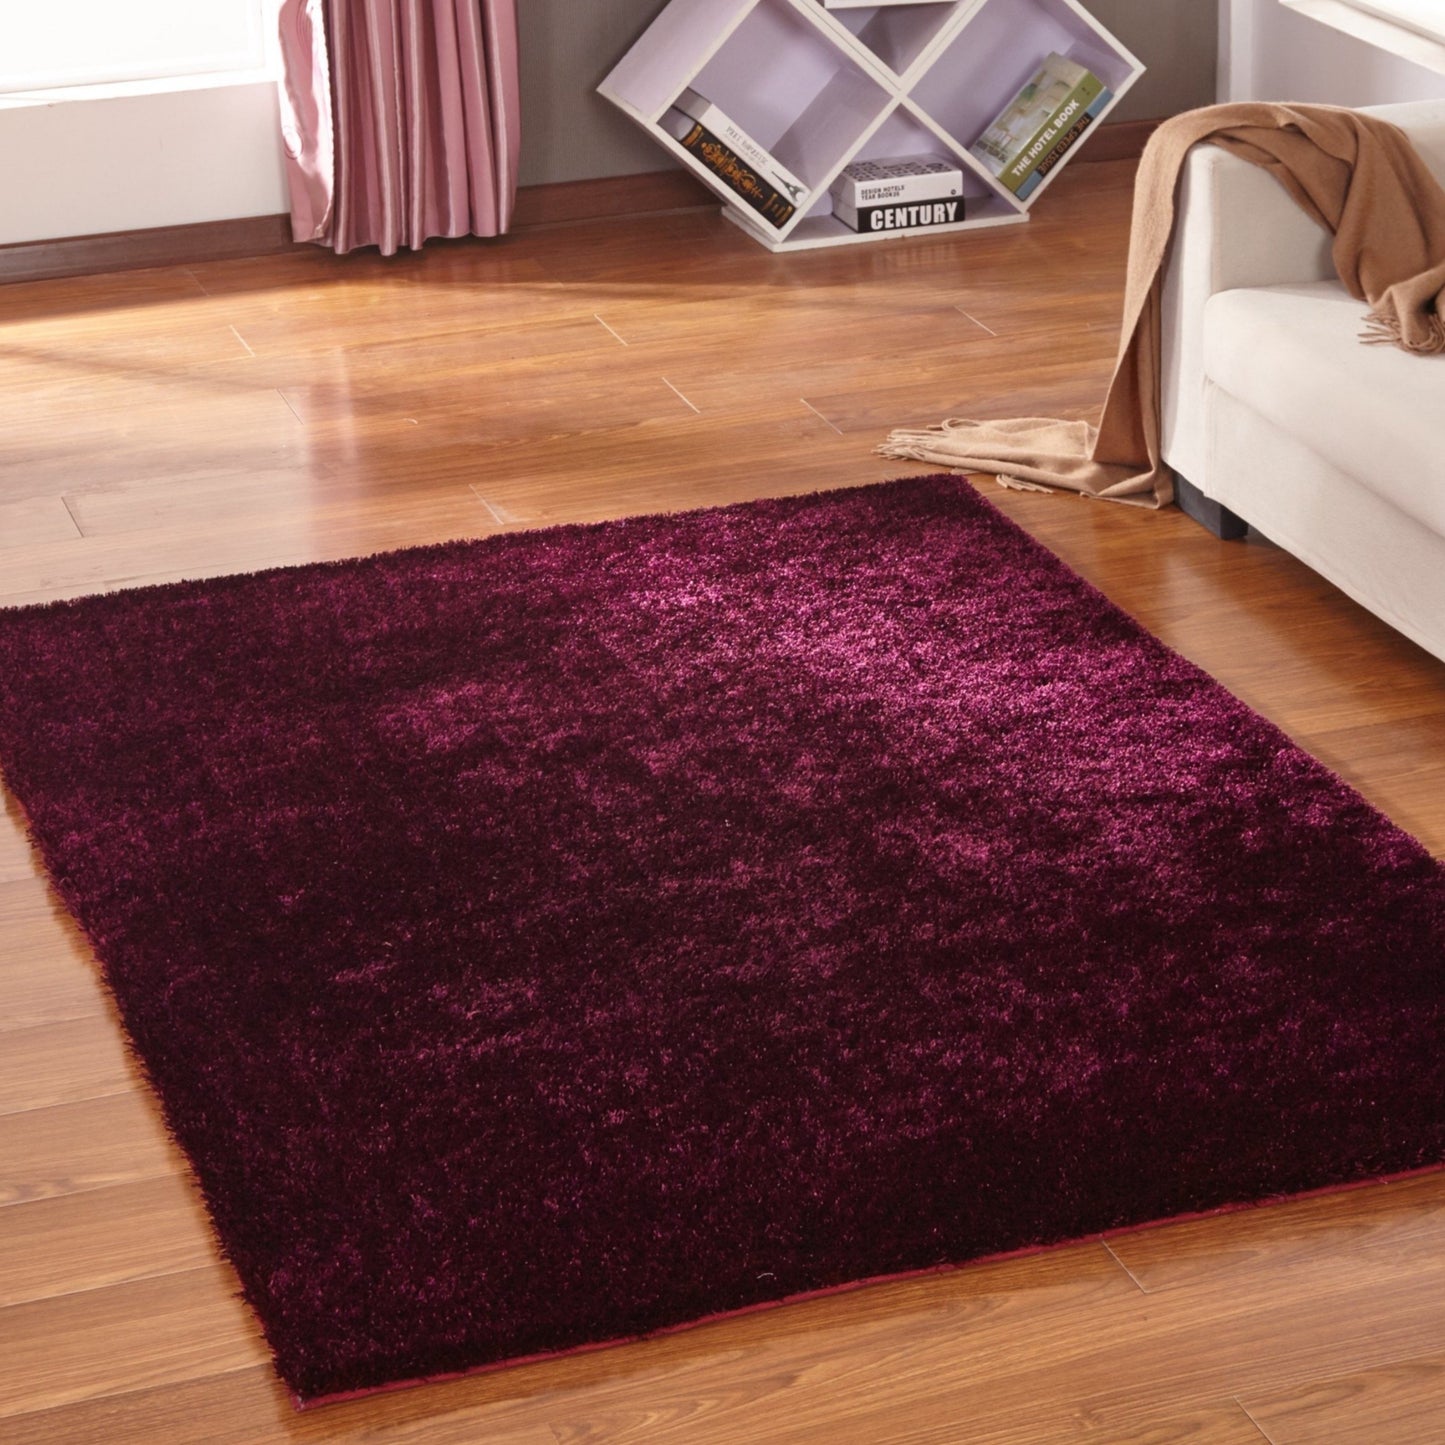 Soft Vibrant Shimmery Cozy Fluffy Plush Shag Area Rug/Carpet 